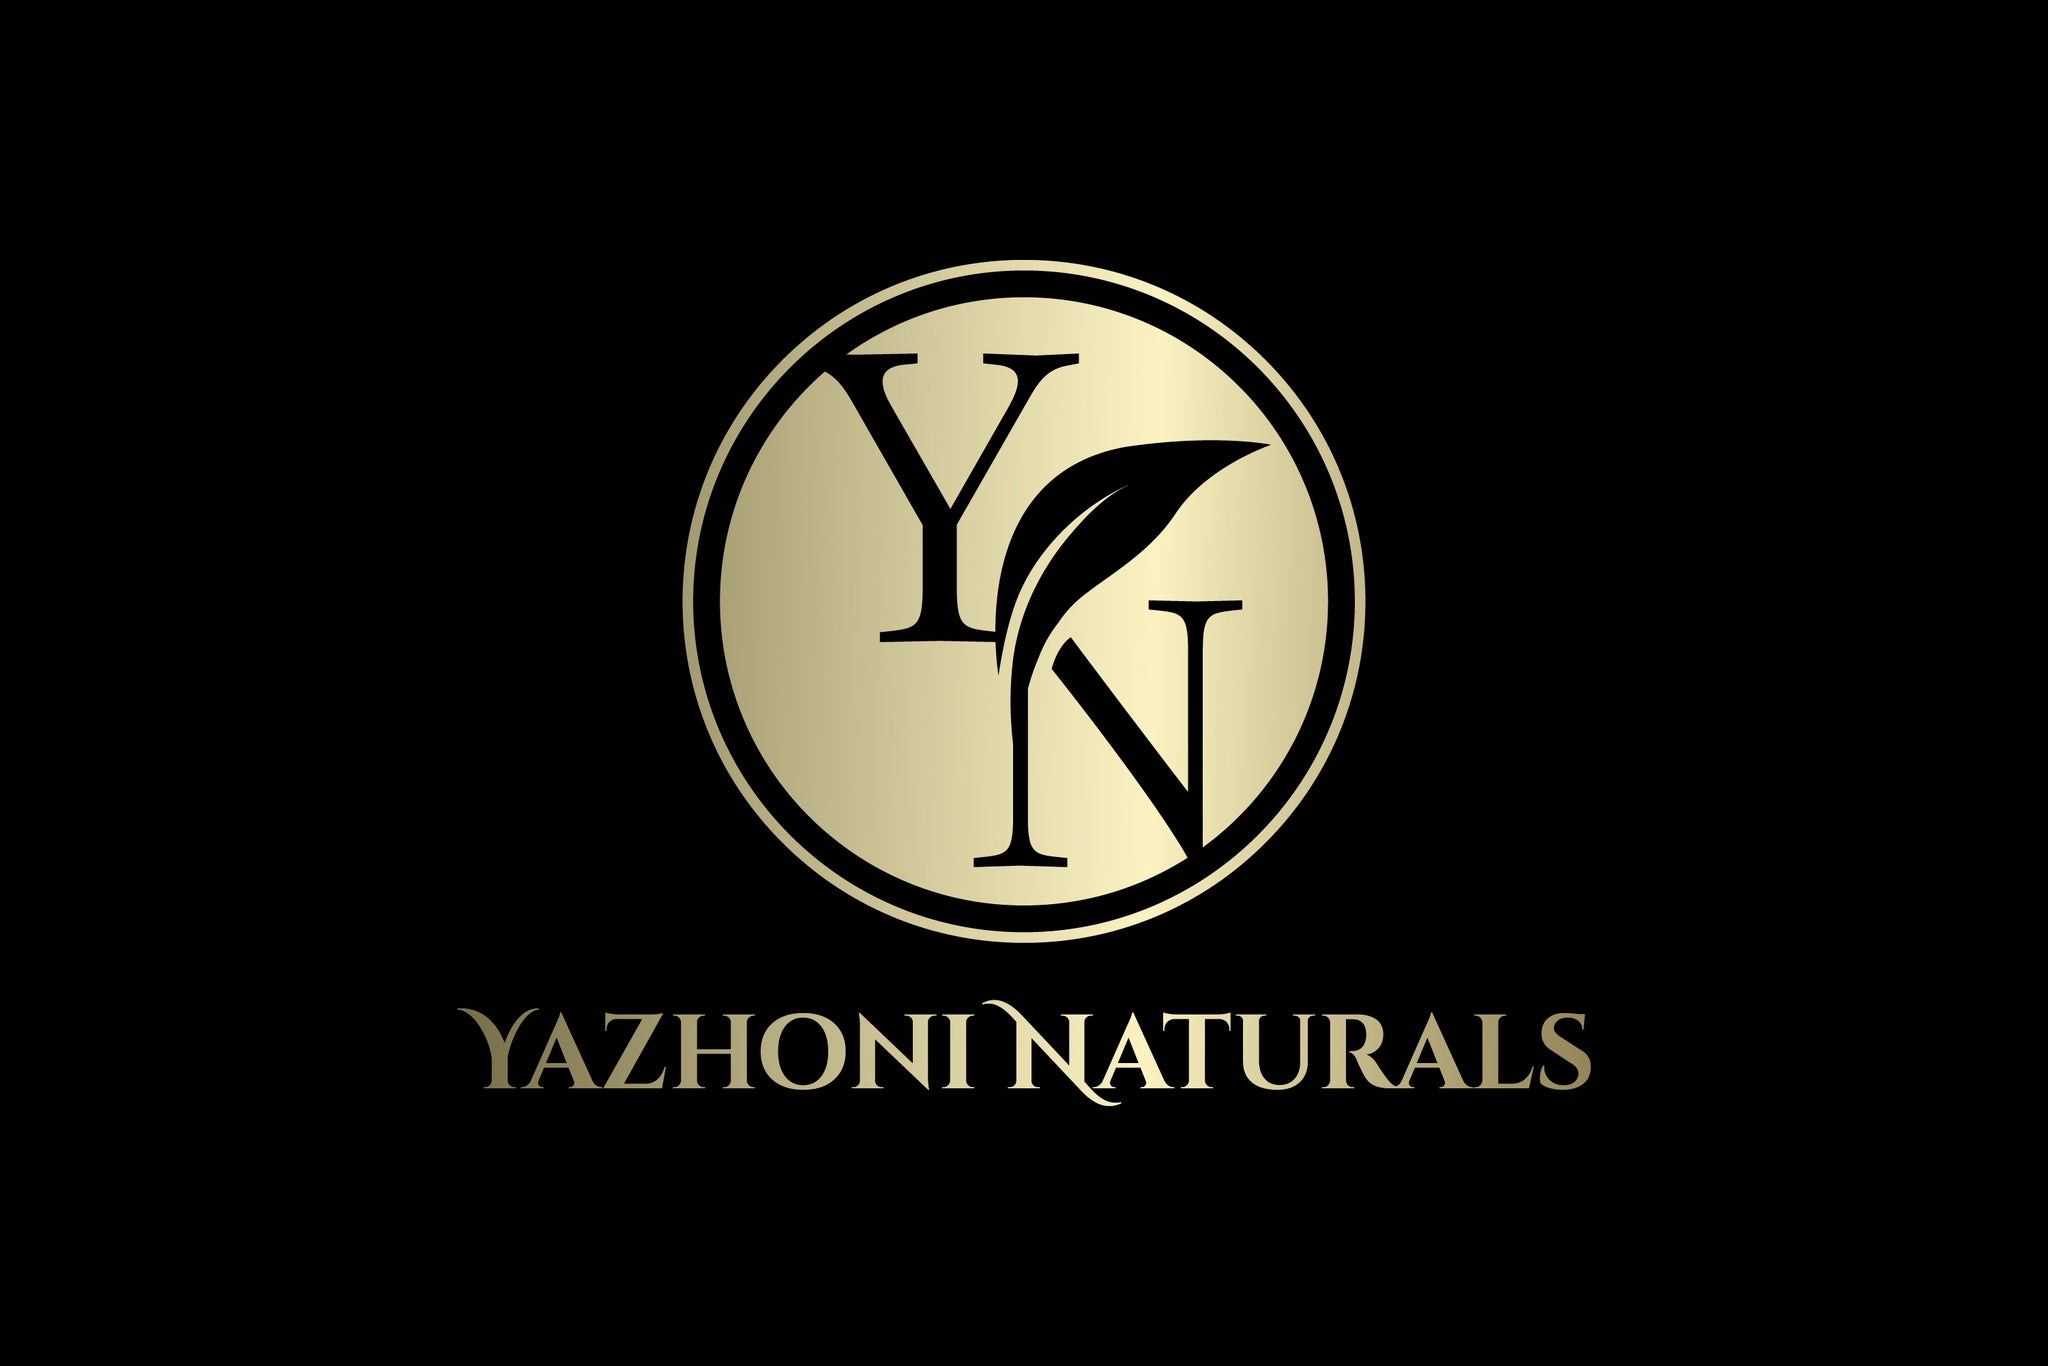 Introducing Yazhoni Naturals